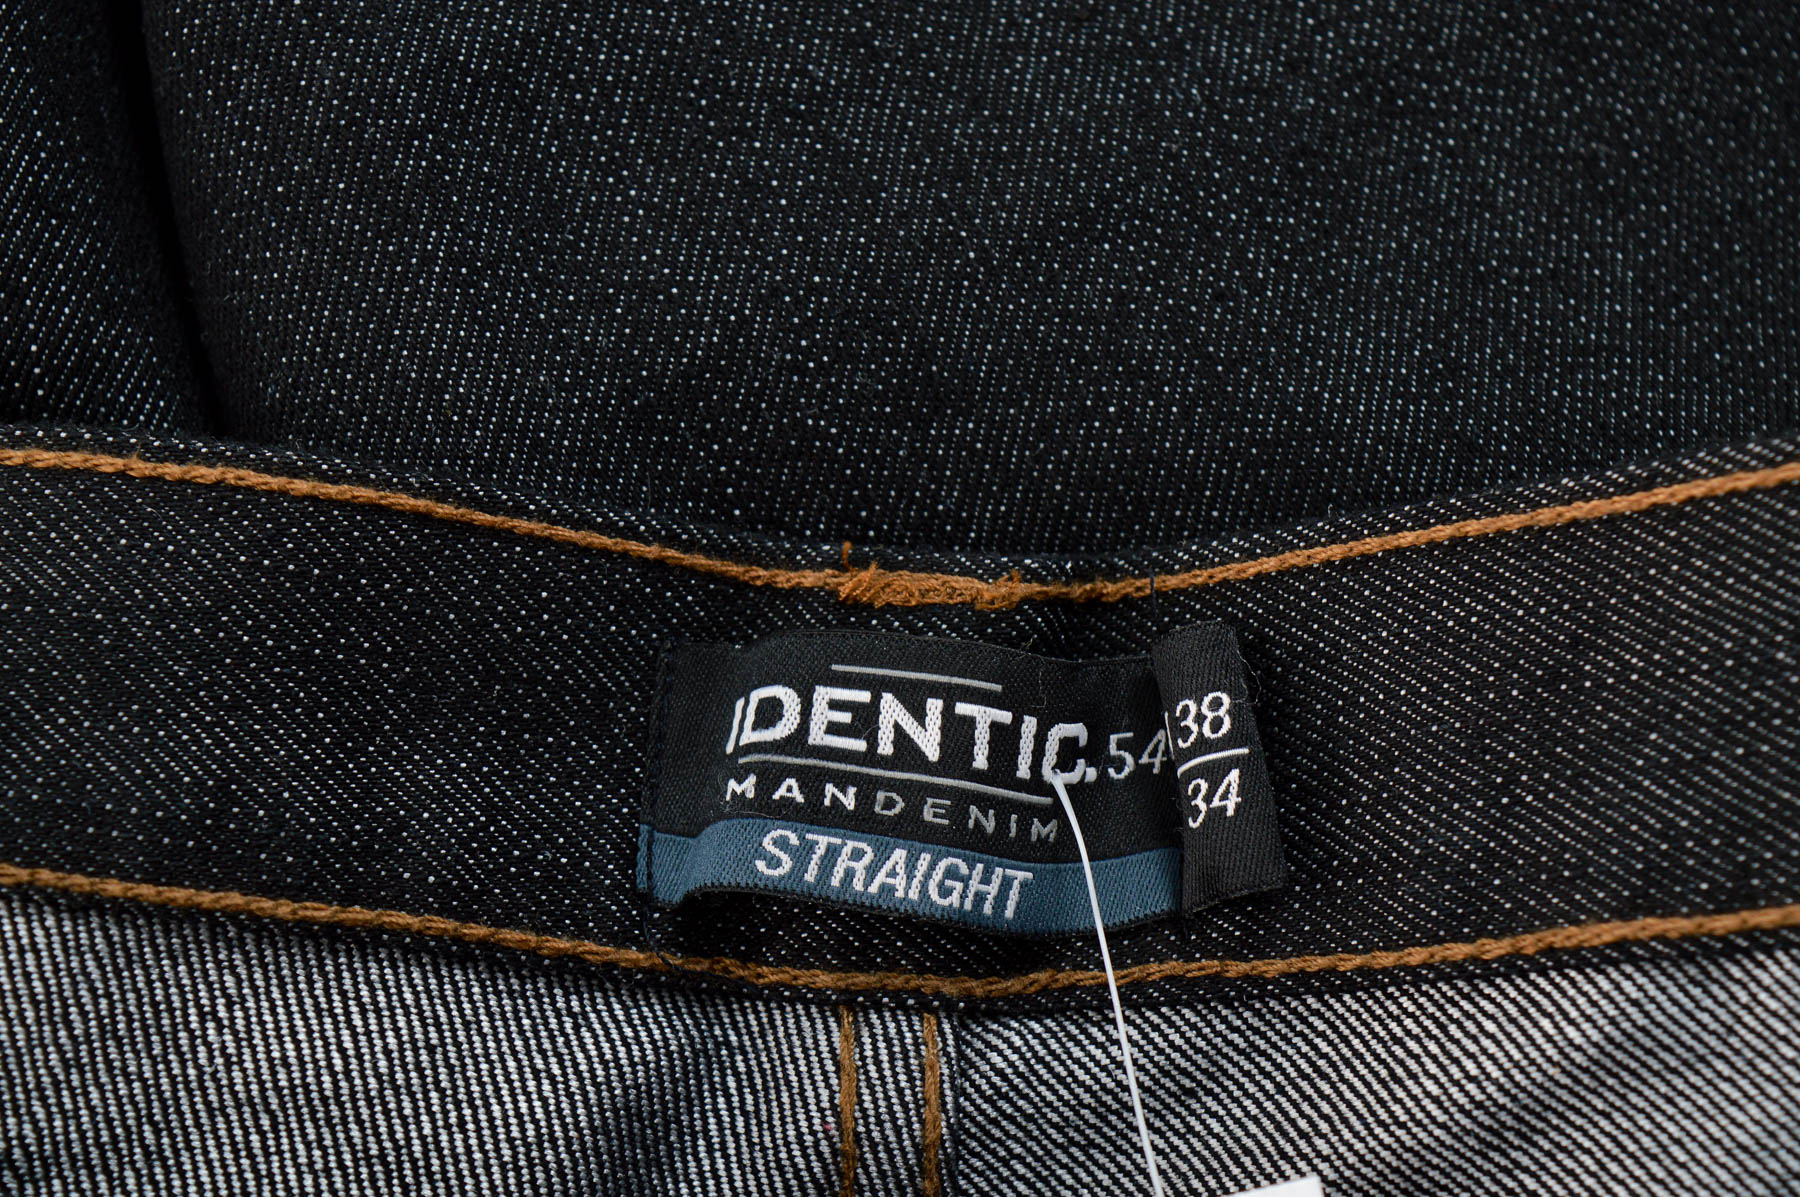 Men's jeans - Identic - 2